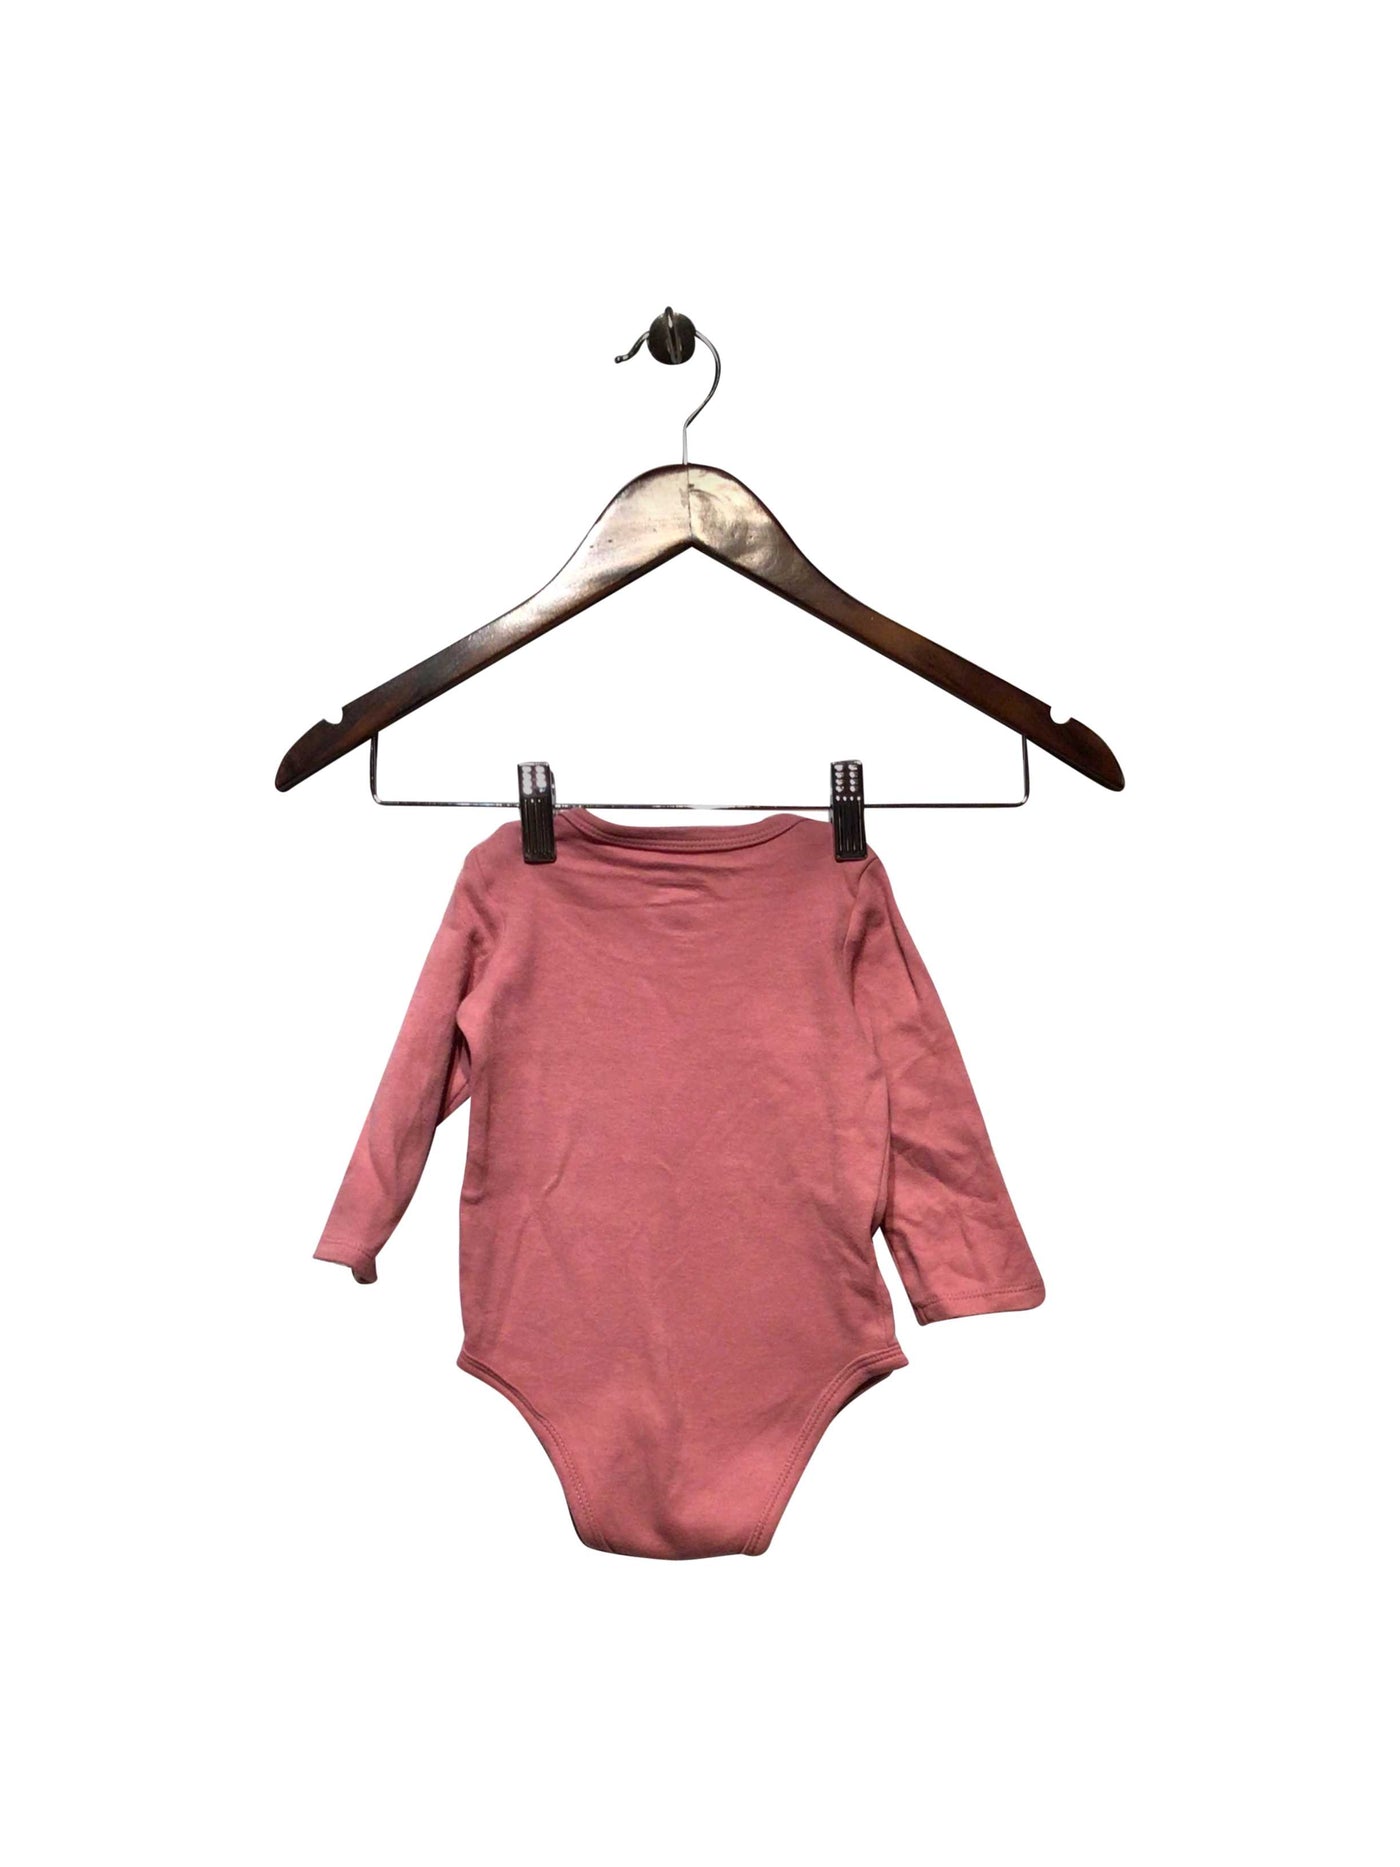 FIRST IMPRESSION Regular fit Pajamas in Pink  -  6-9M  8.99 Koop